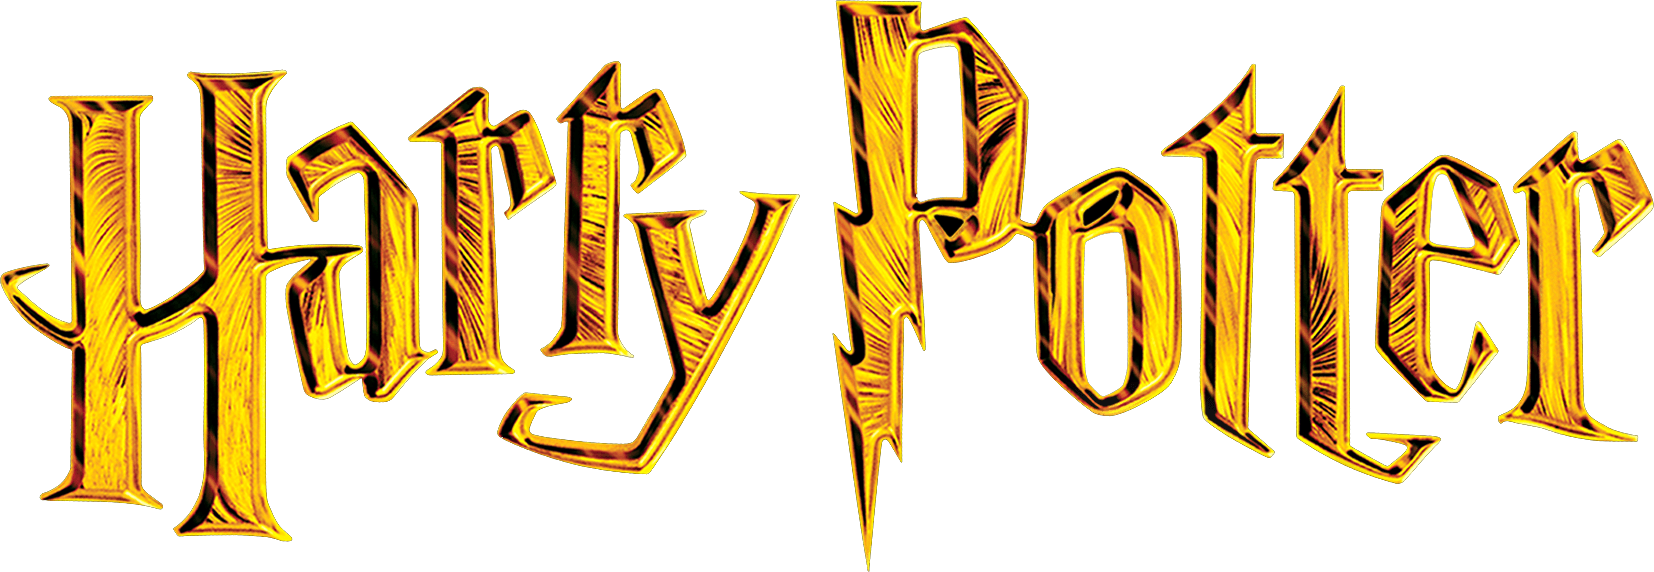 Harry Potter Sorcerer's Stone Logo - Harry Potter | Logopedia | FANDOM powered by Wikia